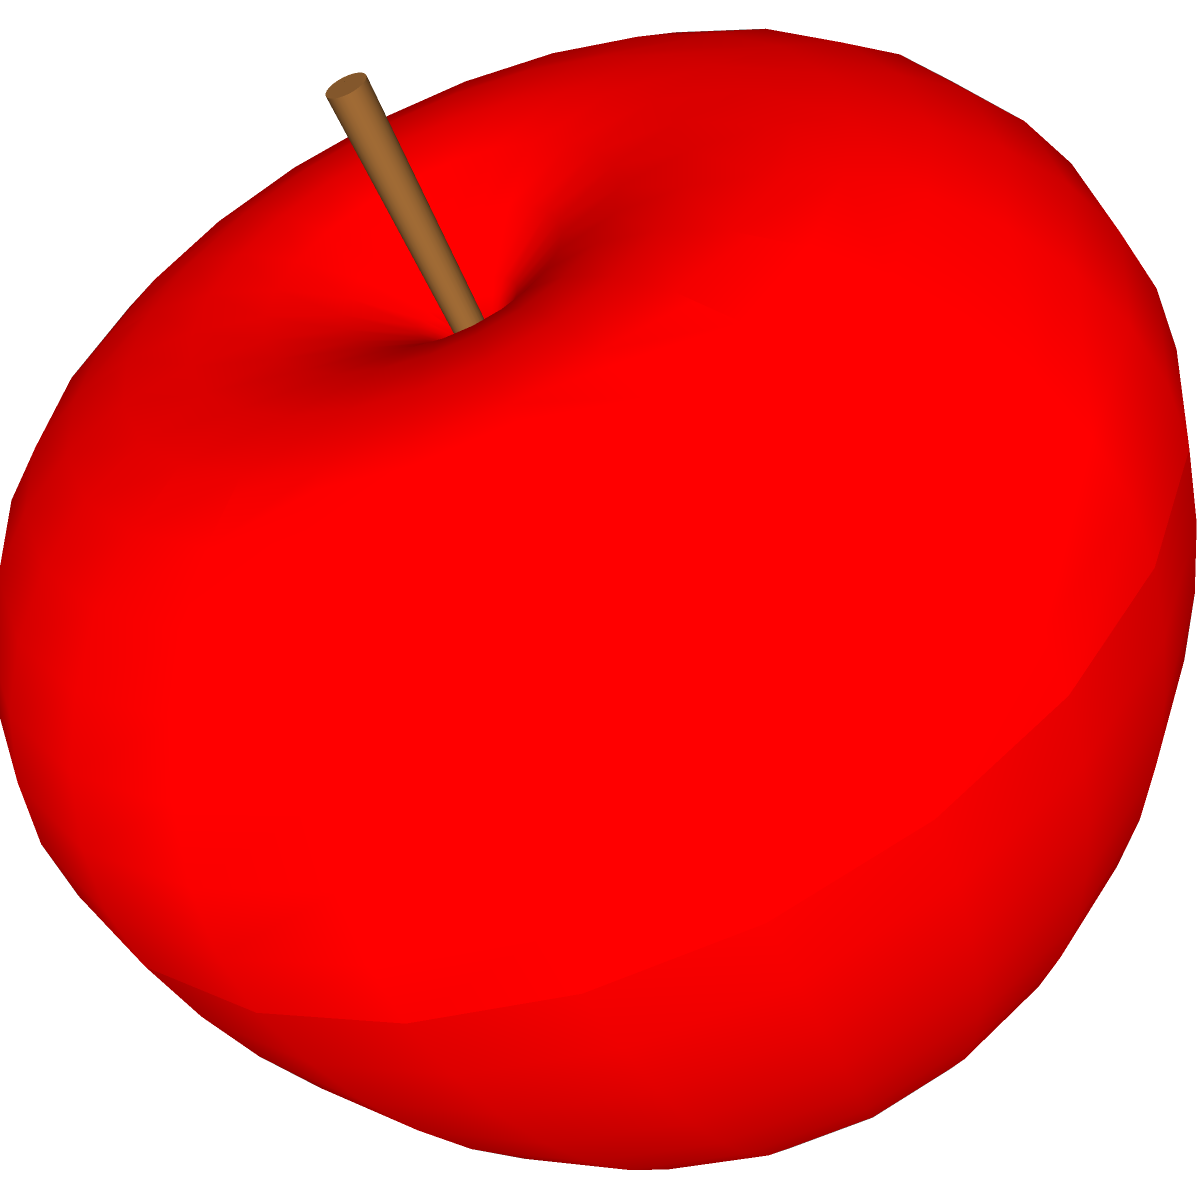 Red Apple Clip Art - Gallery